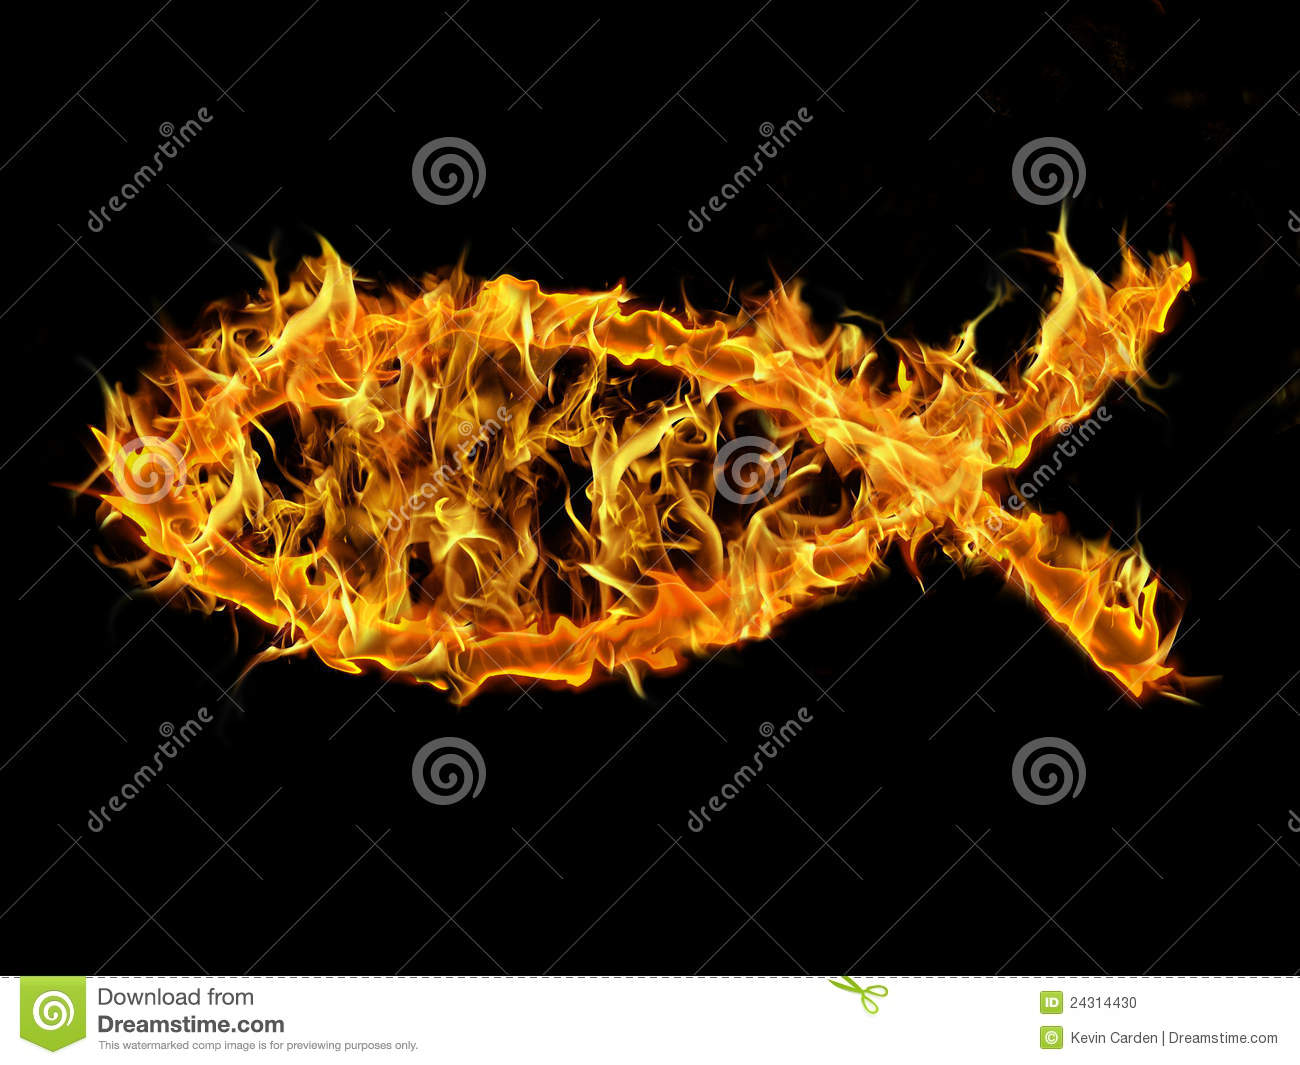 christian-fish-fire-24314430.jpg